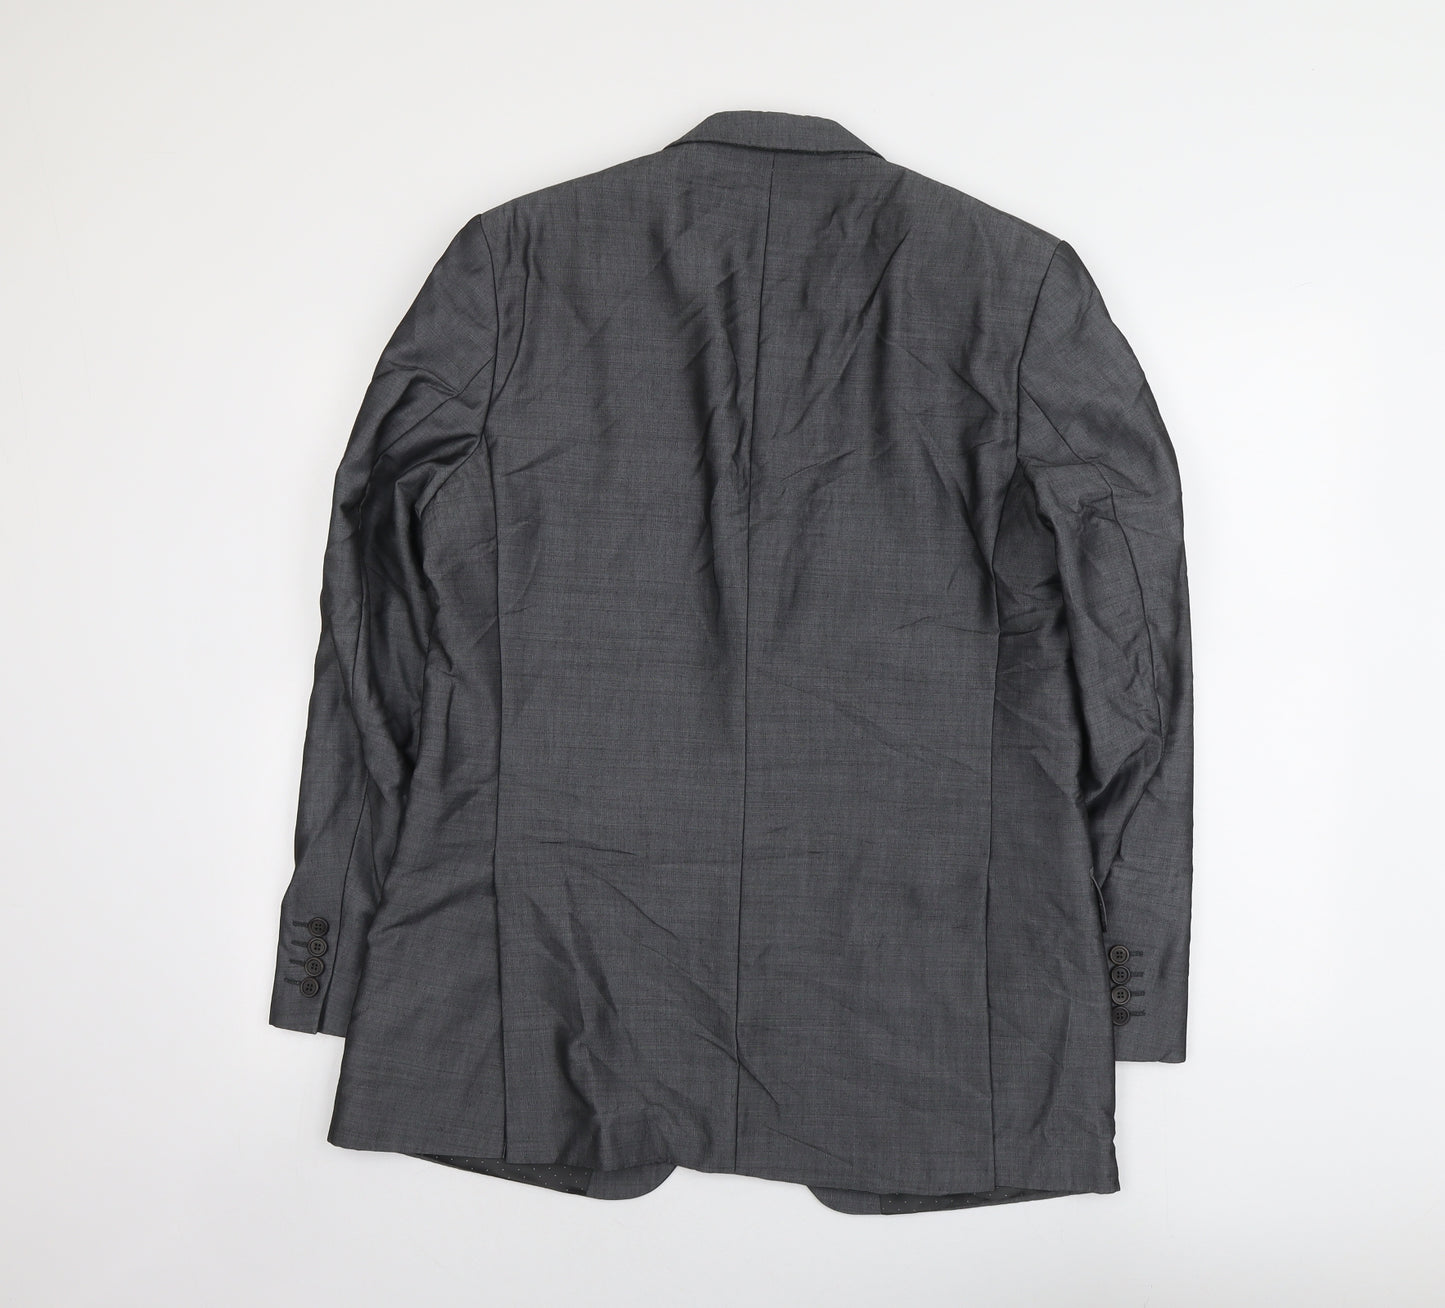 Jasper Conran Mens Grey Viscose Jacket Suit Jacket Size L Regular